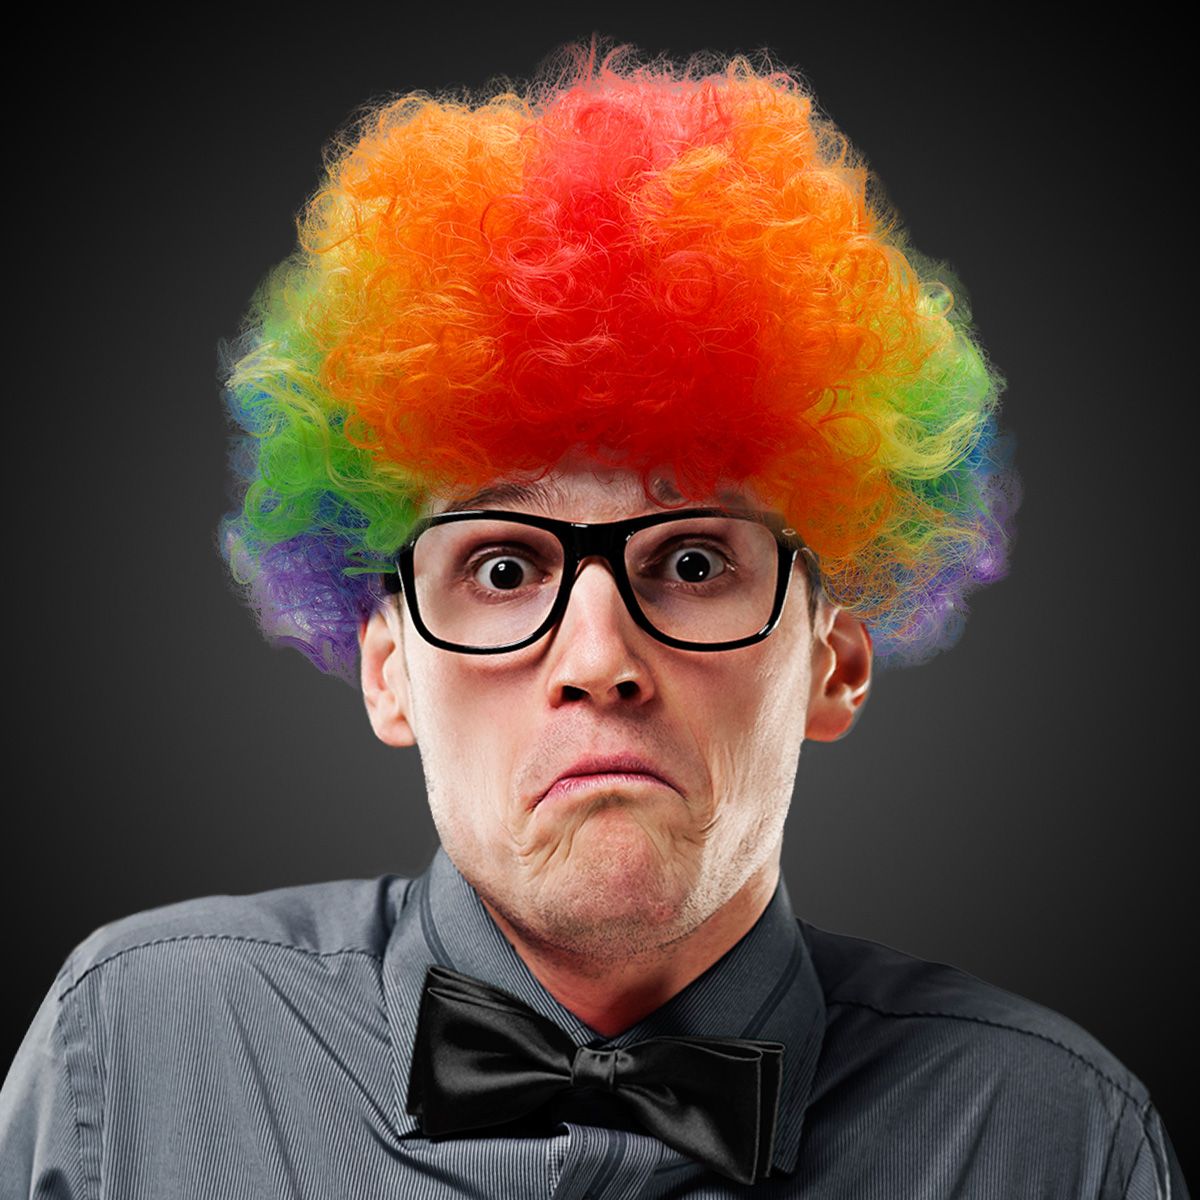 Funny person in a clown wig